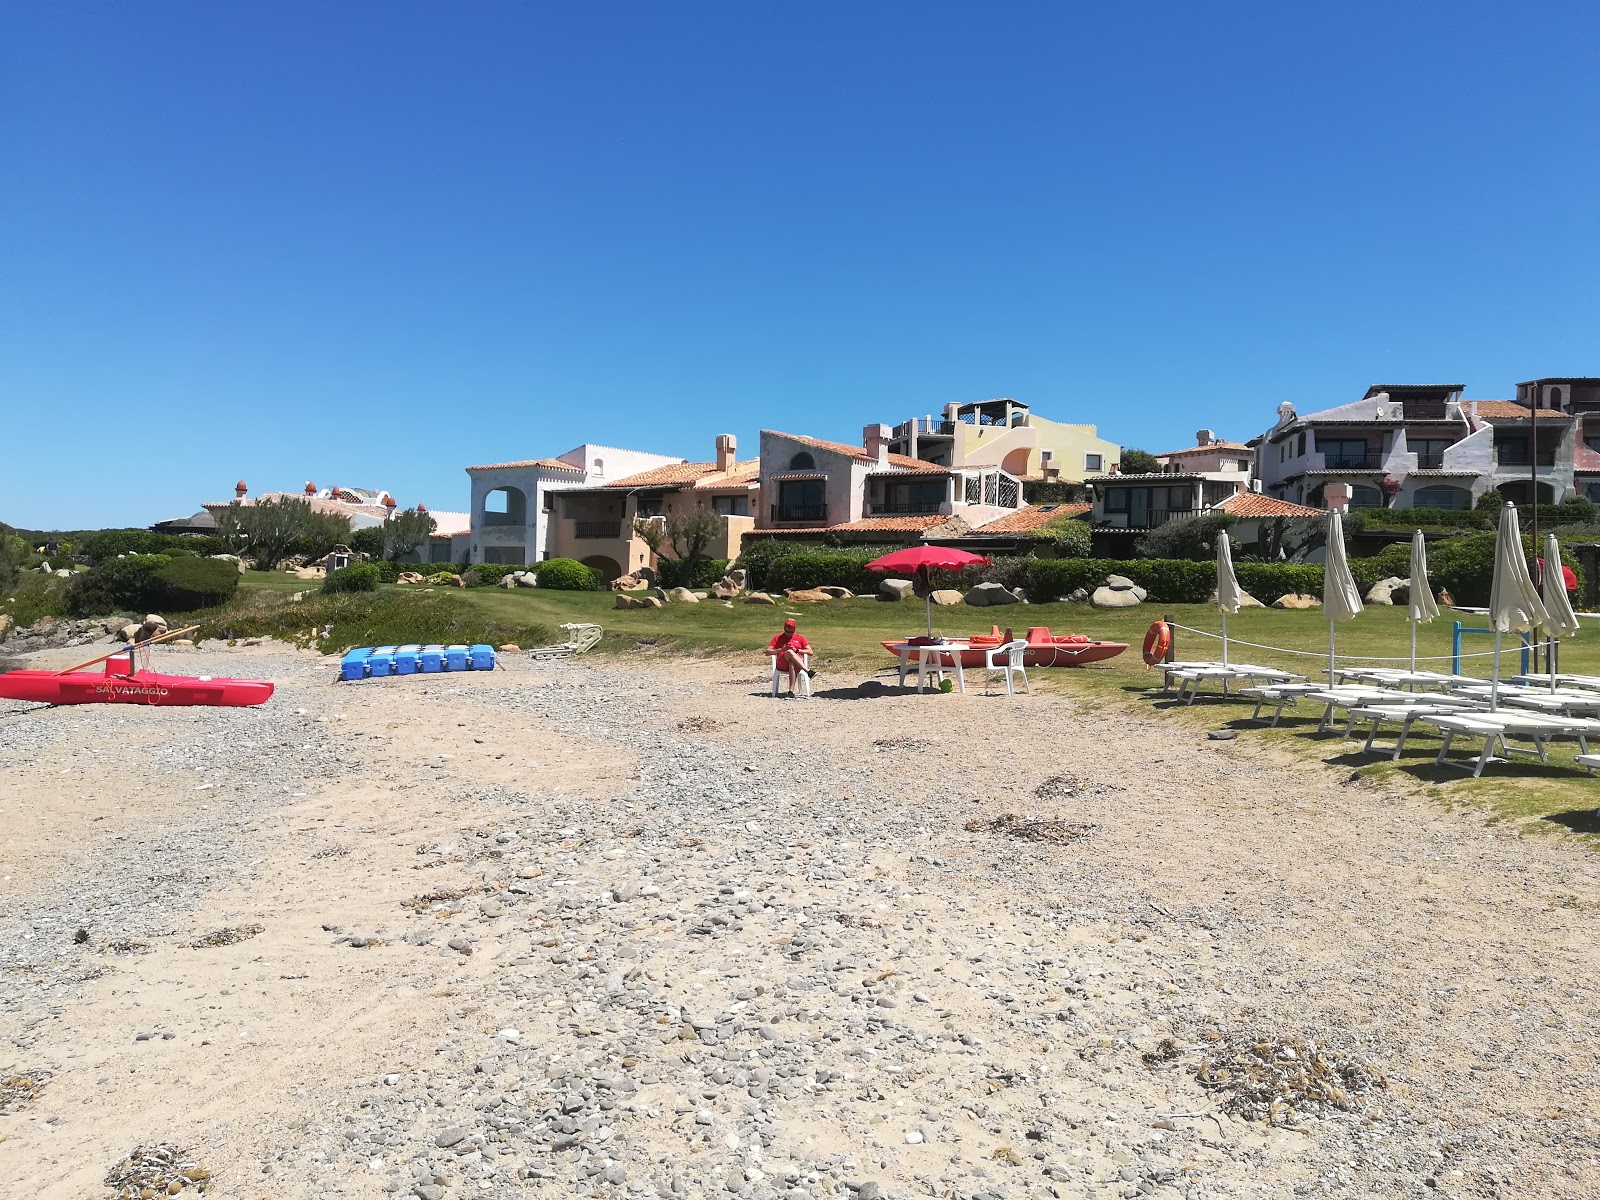 Foto van Spiaggia Cala del Faro met gemiddeld niveau van netheid